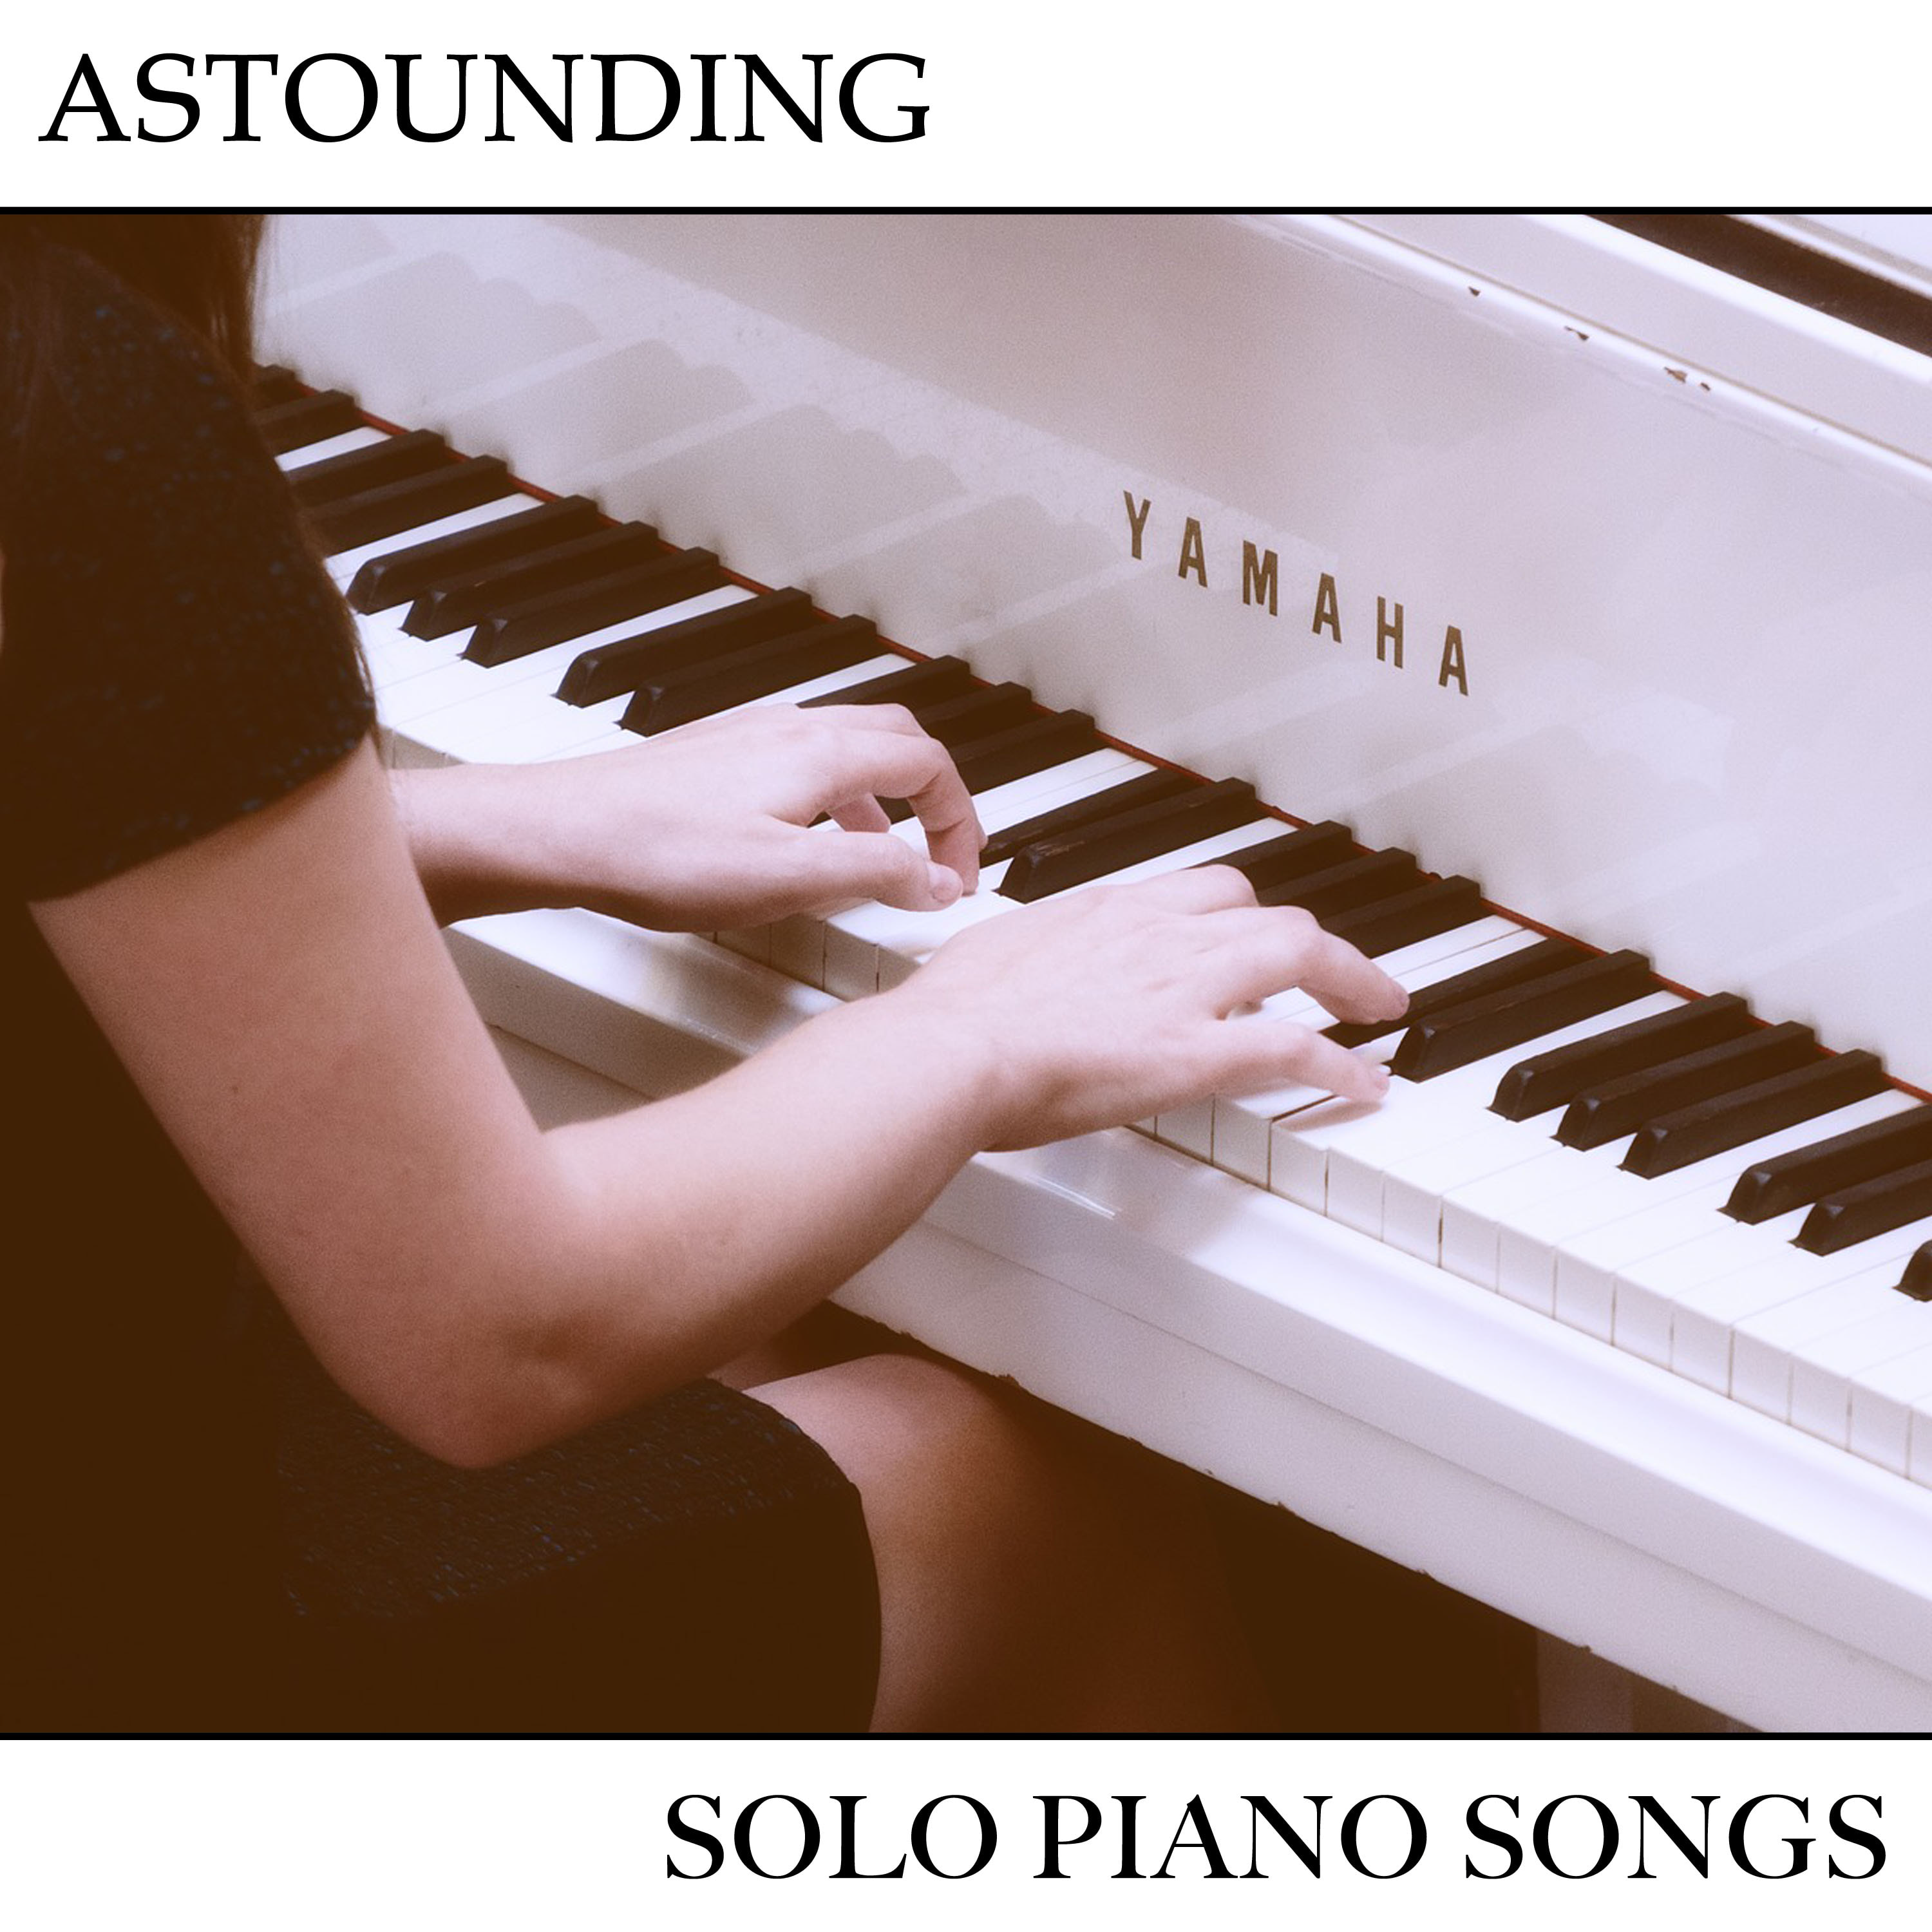 #15 Astounding Solo Piano Songs